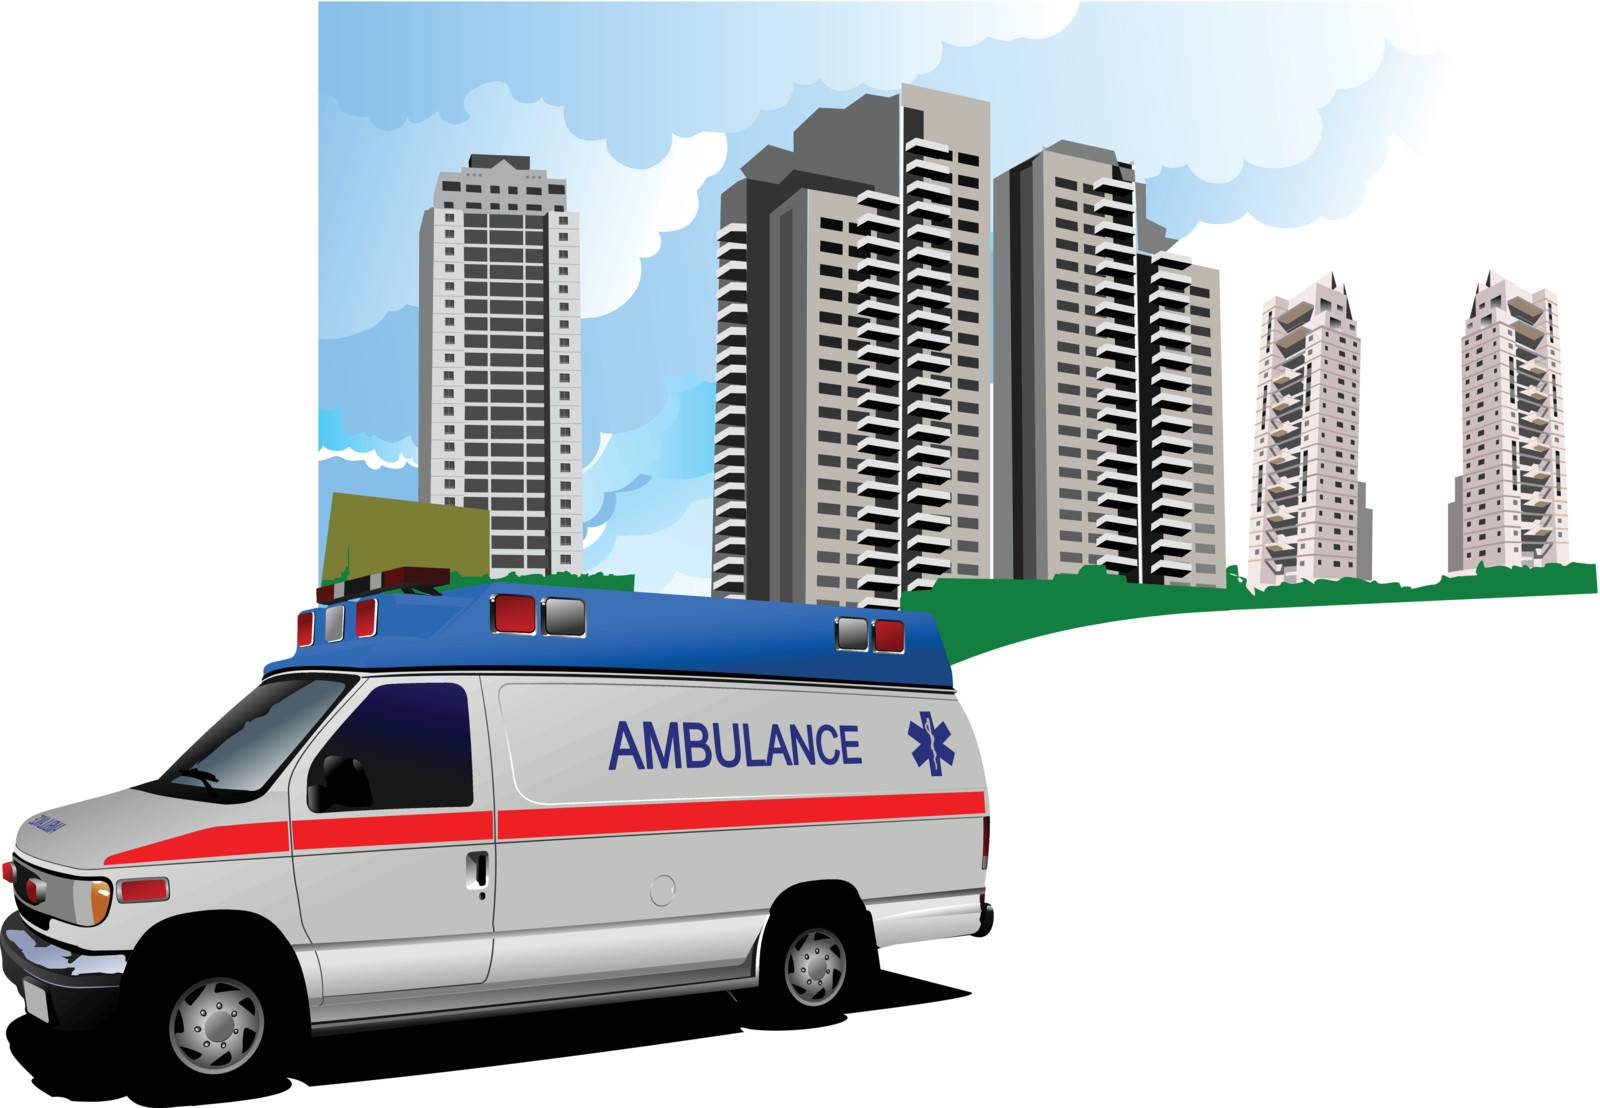 Dormitory and ambulance. Vector illustration by leonido